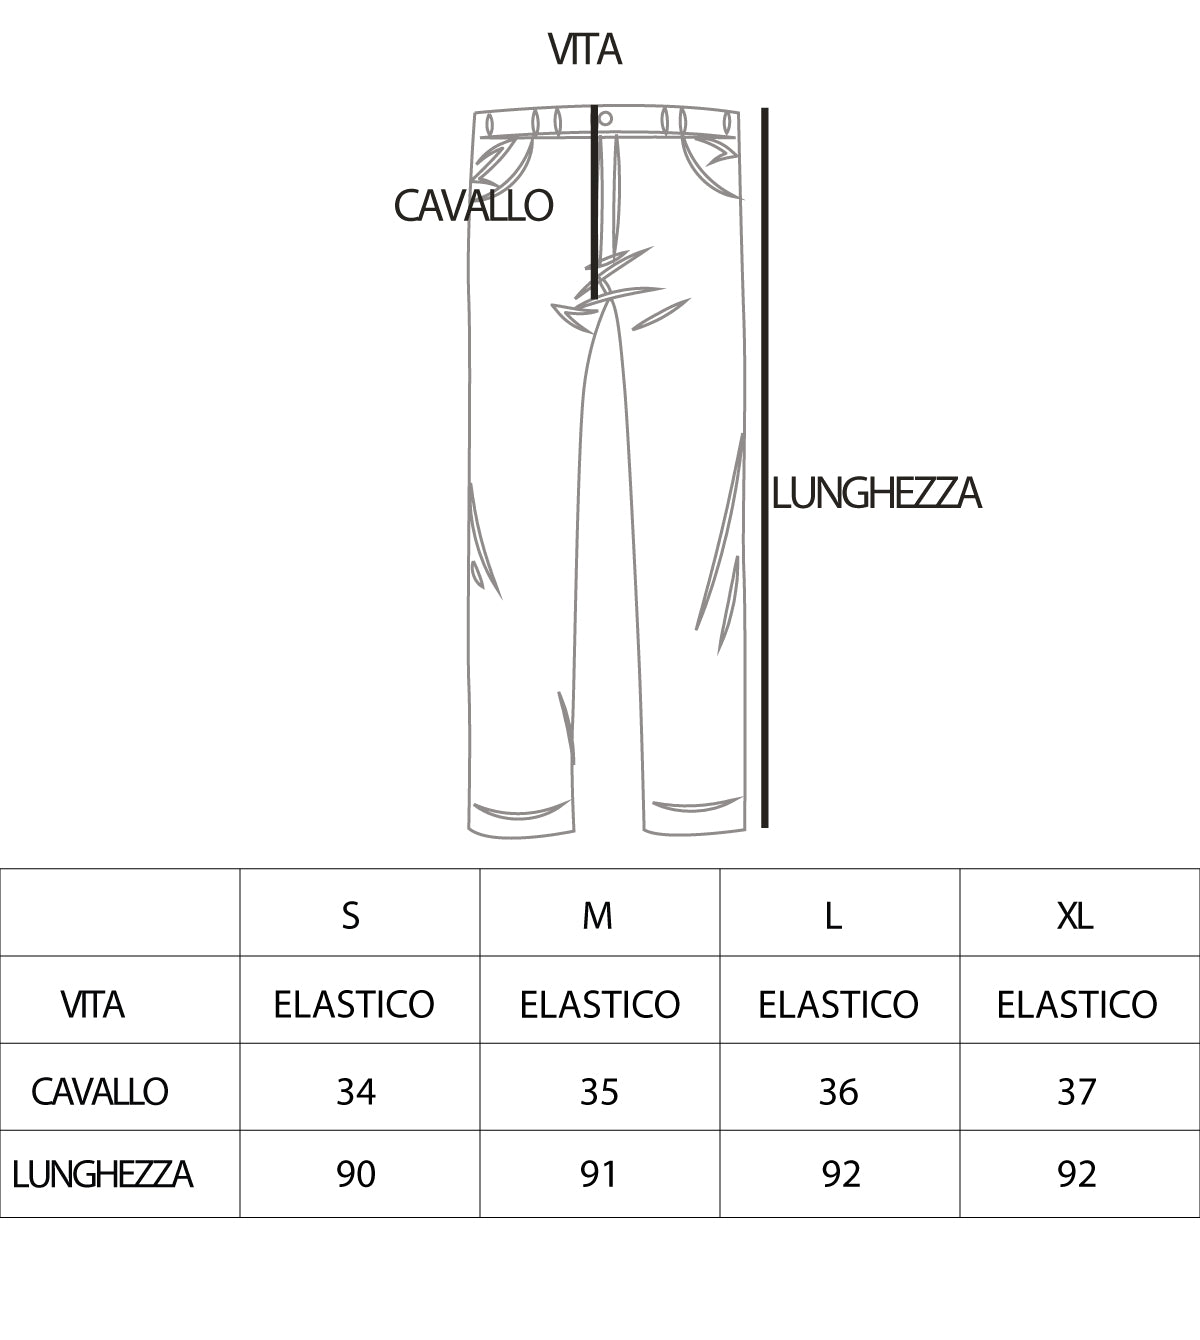 Men's Solid Color Tracksuit Pants Camel Drawstring Cargo Pockets GIOSAL